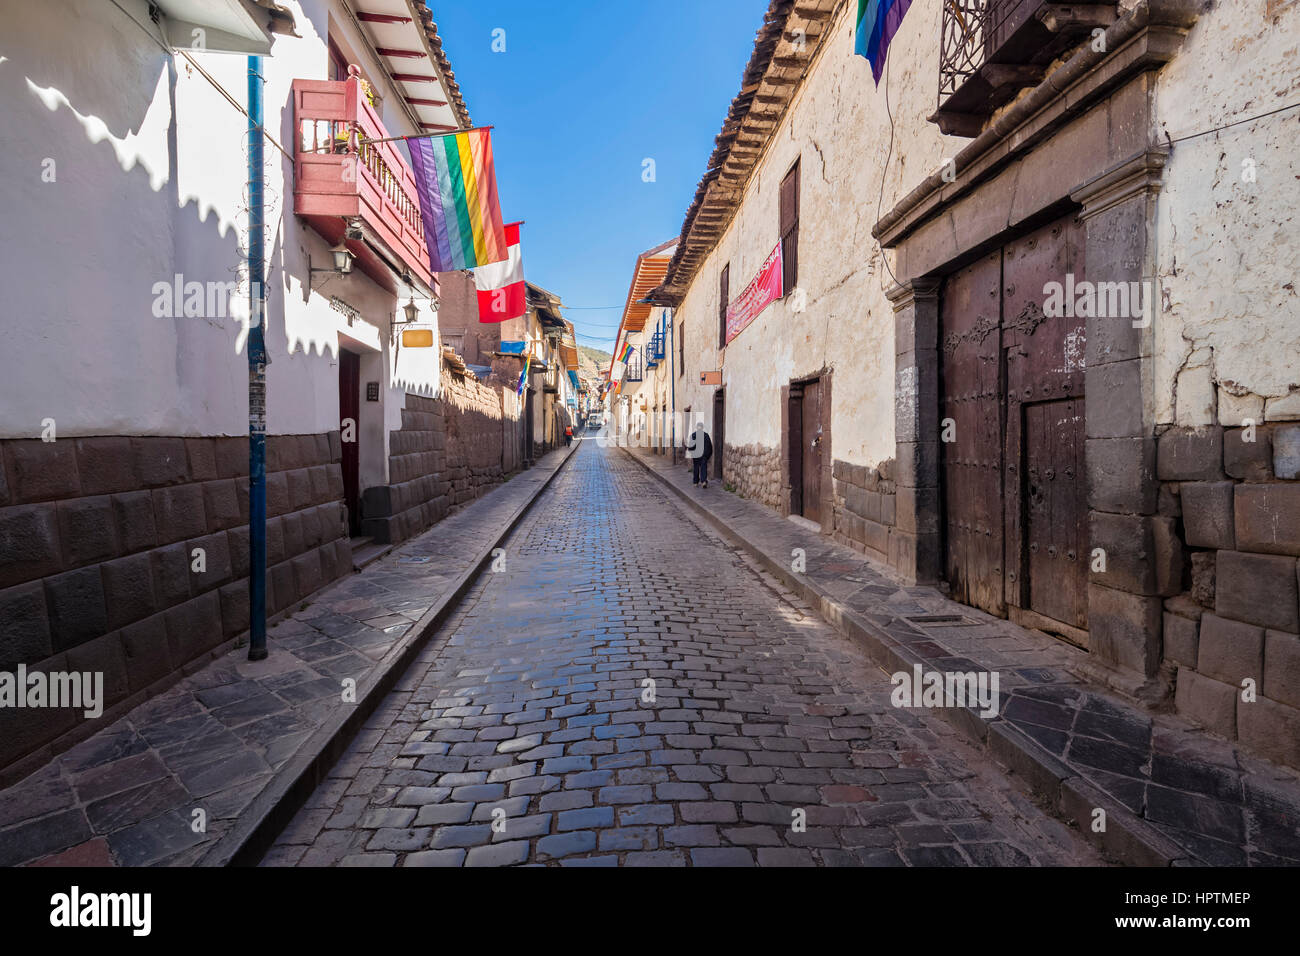 Peru, Cusco, road with cobblestones in the city Stock Photo